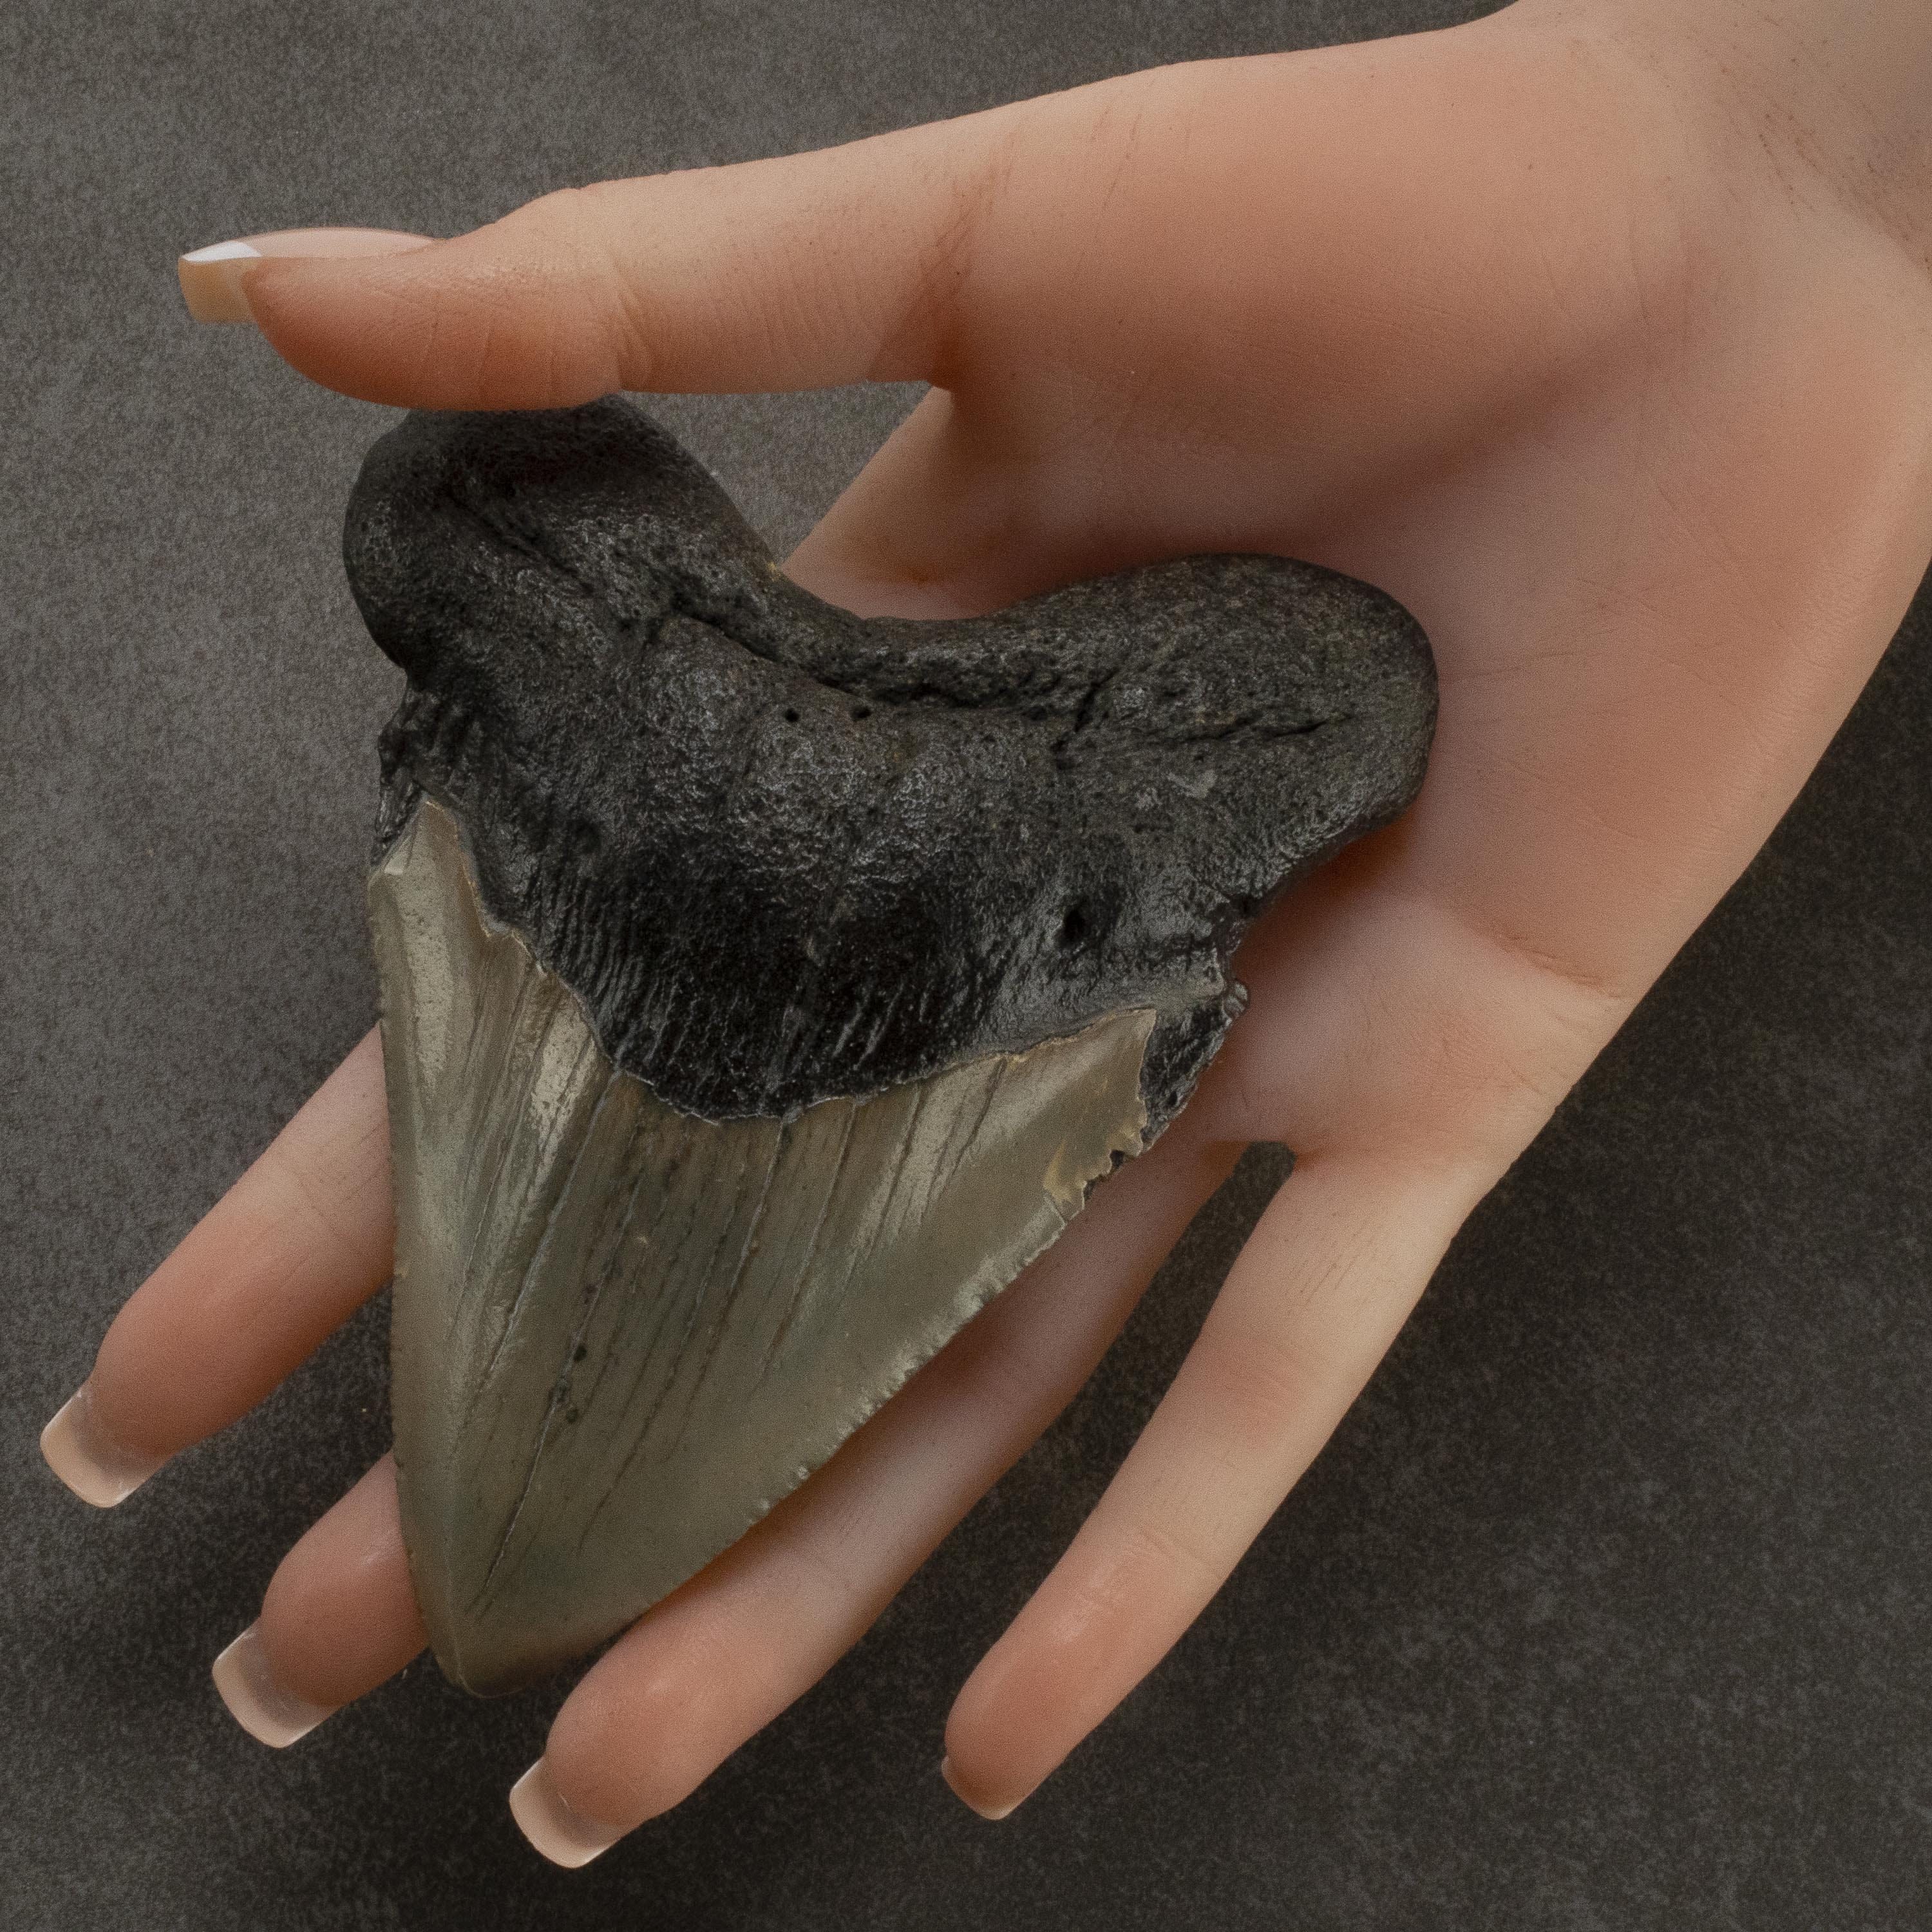 Kalifano Megalodon Teeth Megalodon Tooth from South Carolina - 4.4" ST2000.081